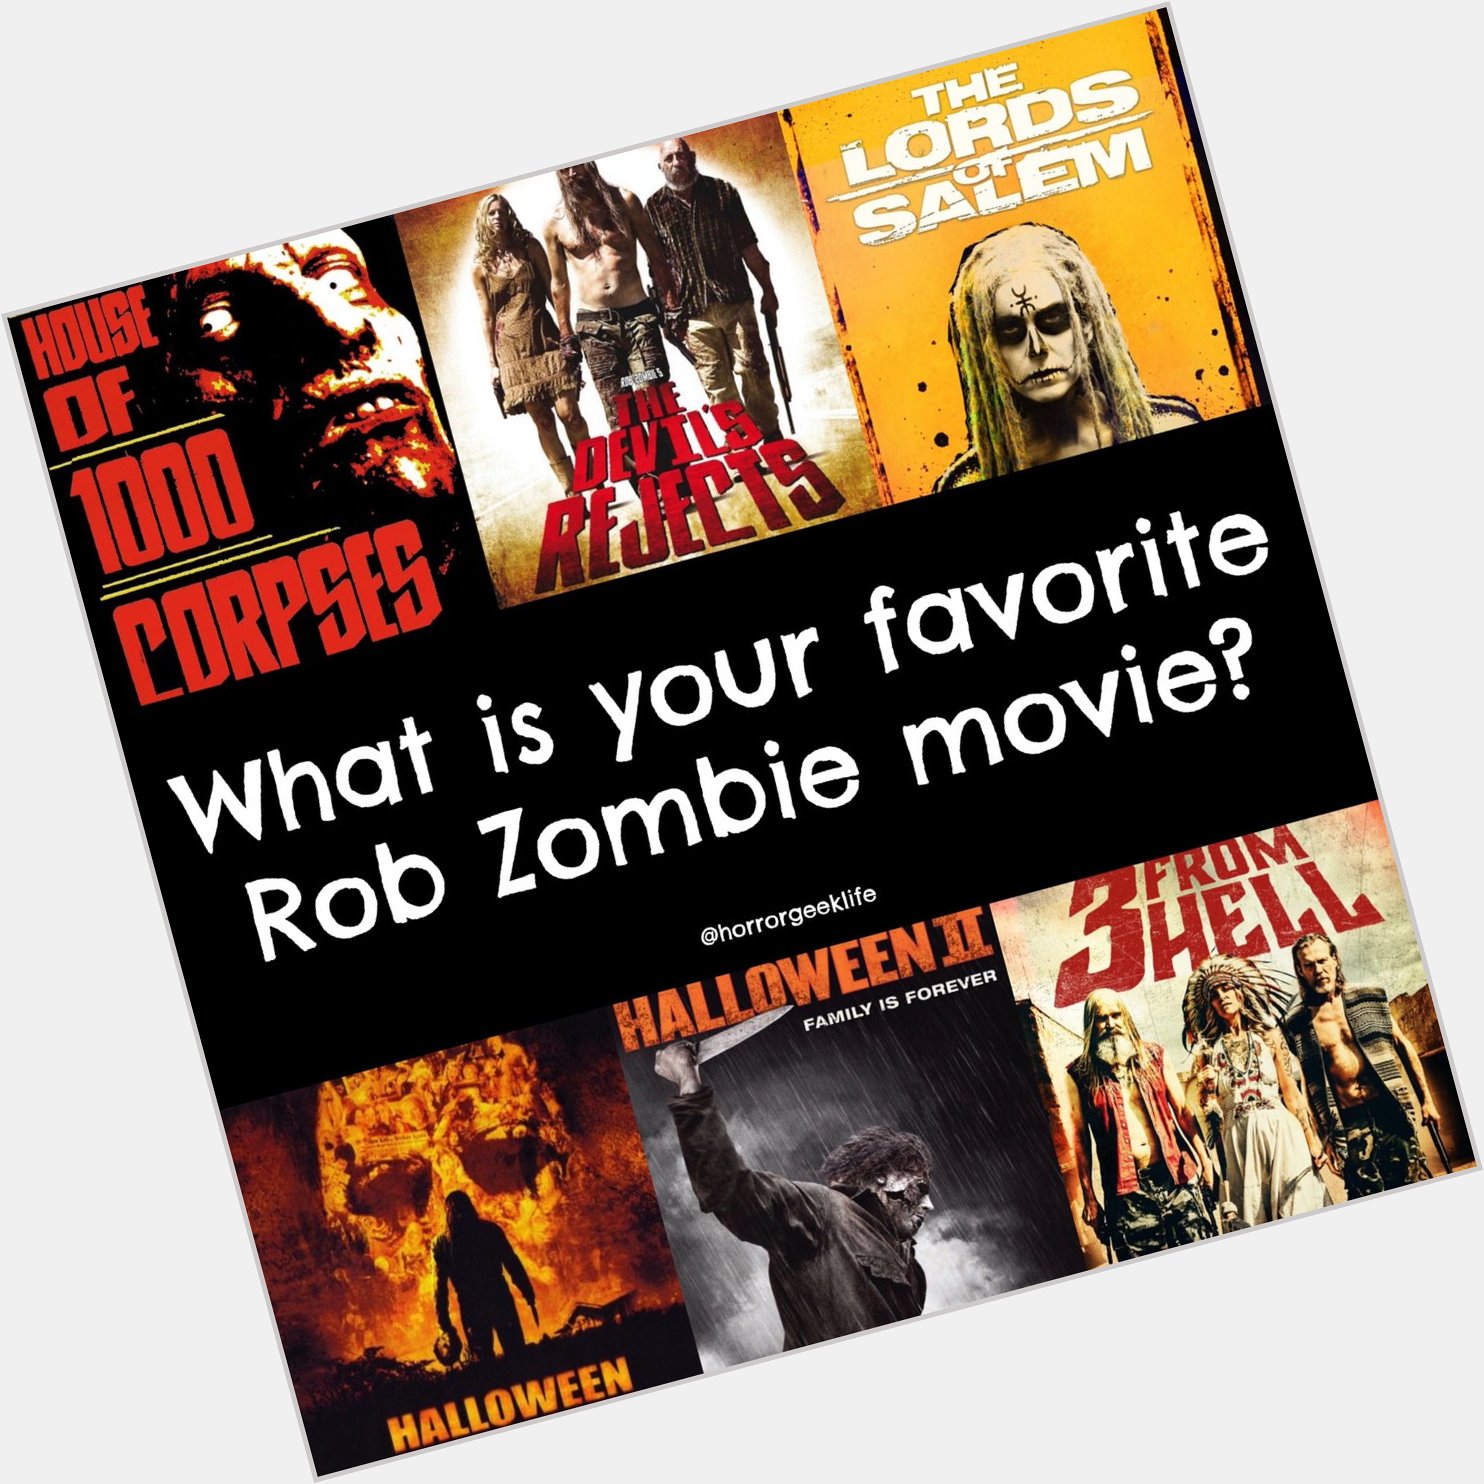 Happy birthday to Rob Zombie, who turns 57 today! 